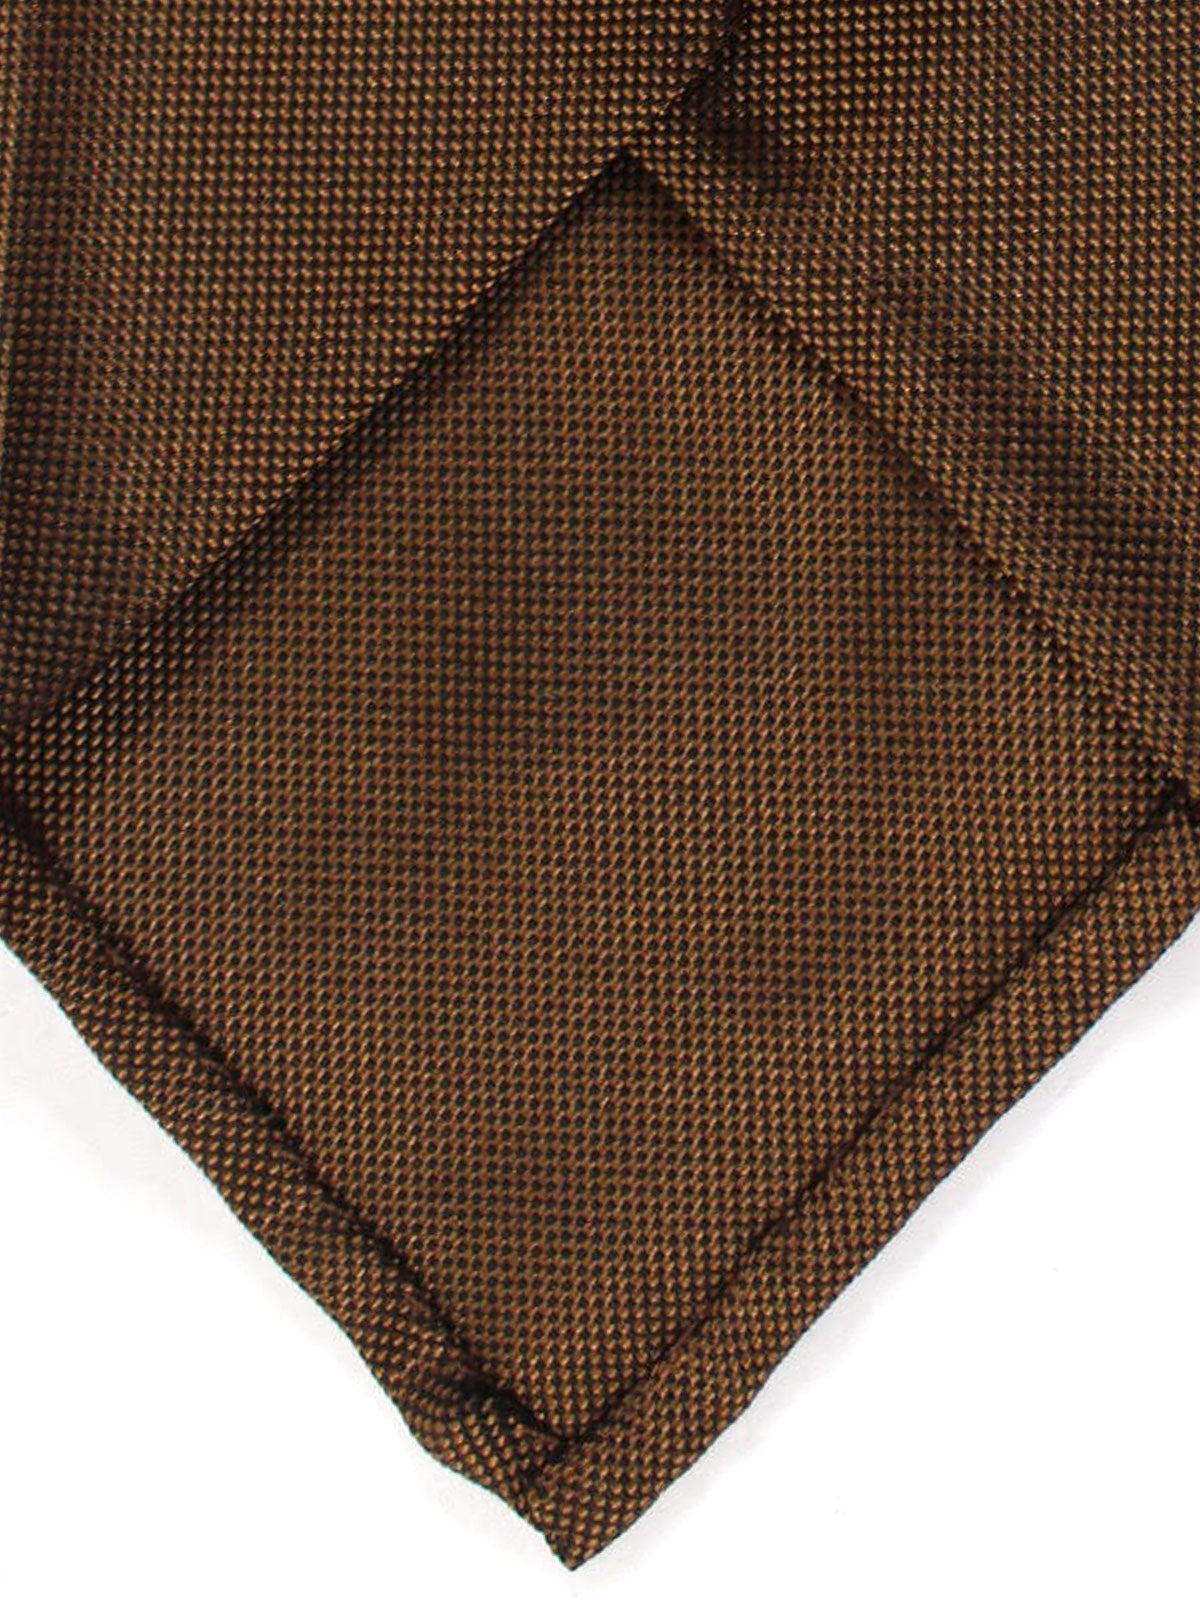 Borrelli Necktie - Unlined Brown Micro Dots Design